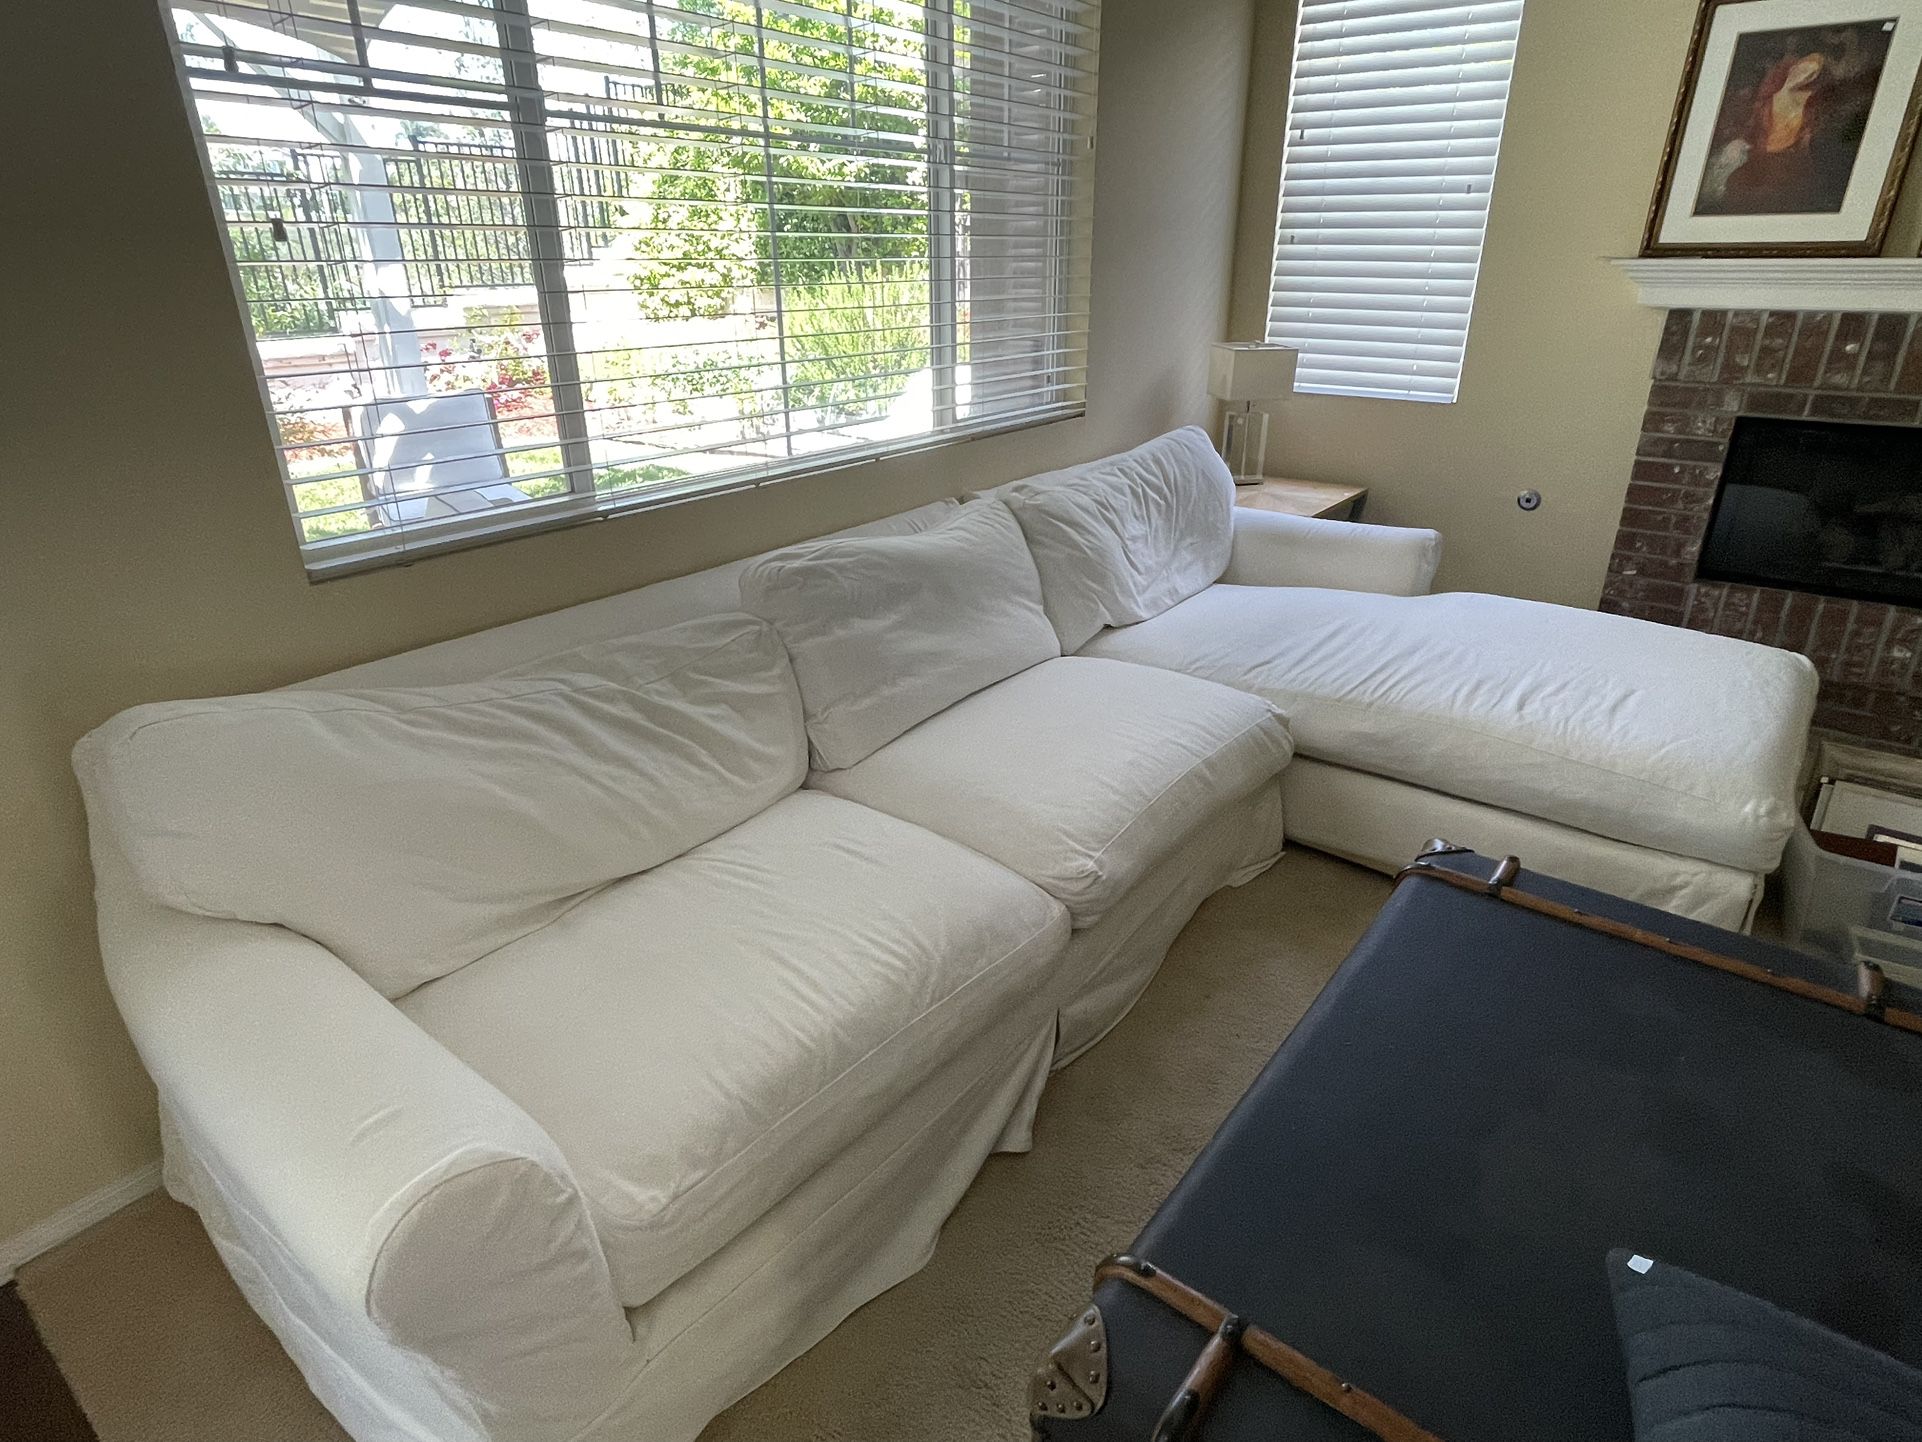 Restoration Hardware sofa